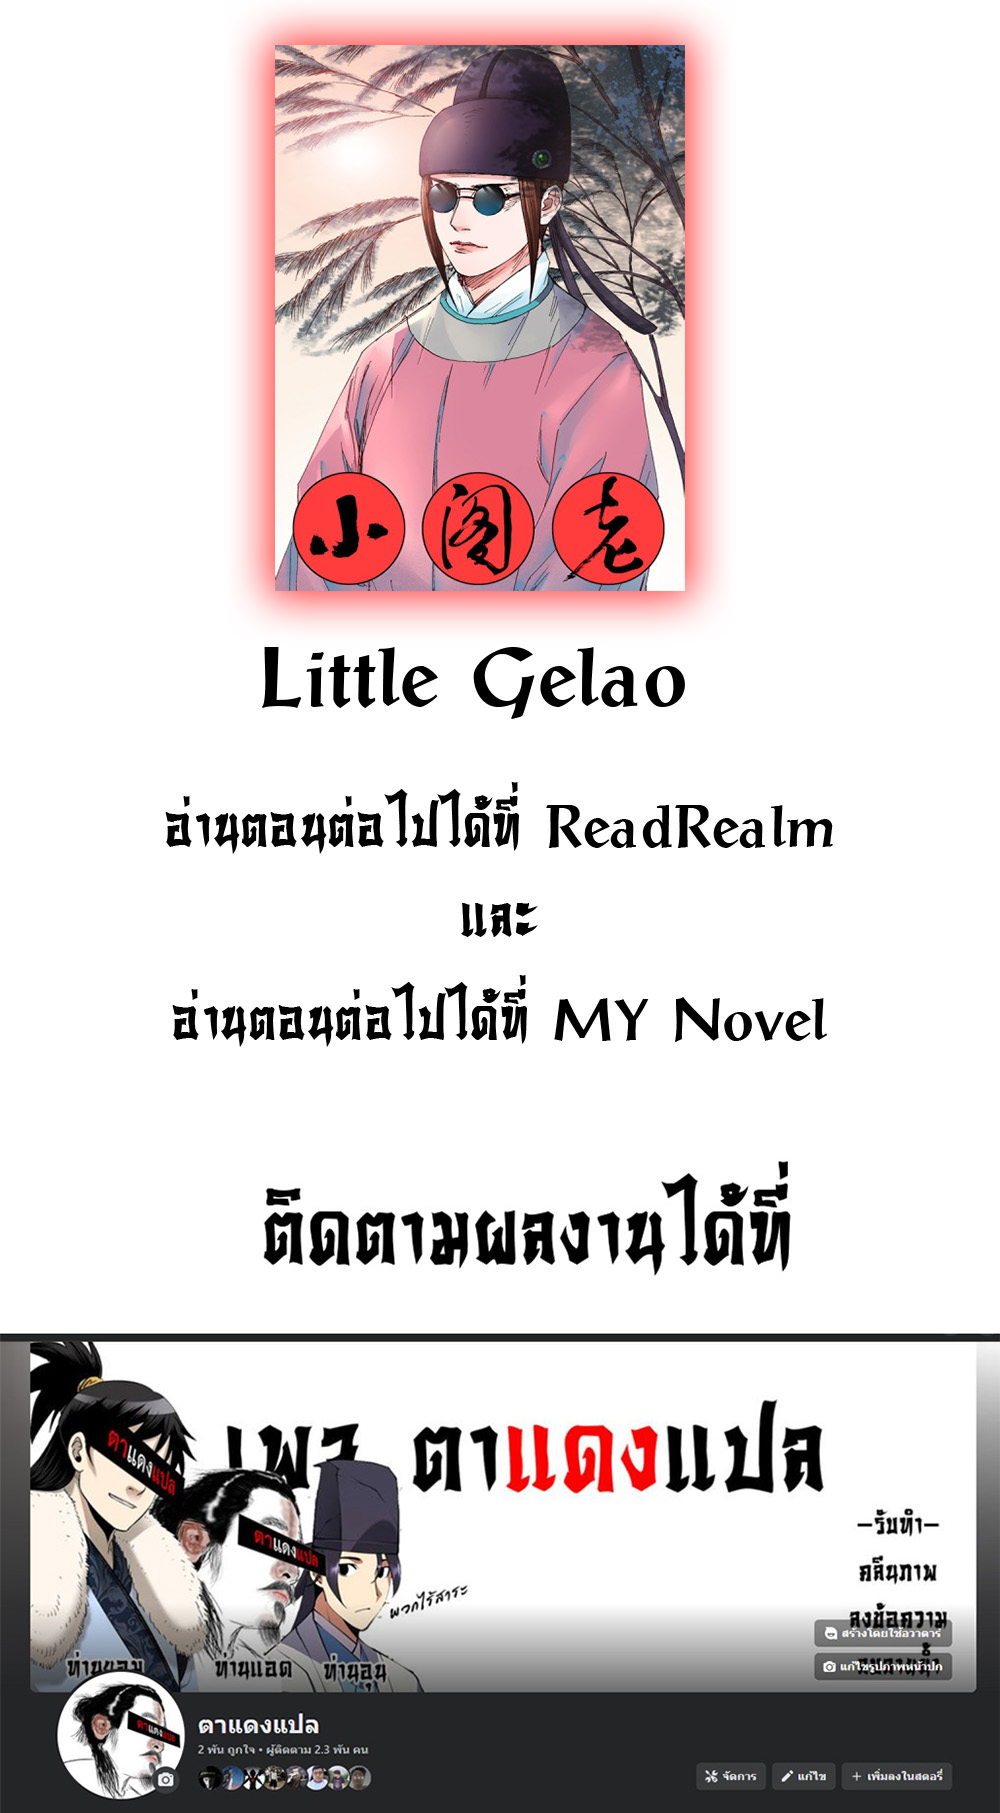 Little Gelao 13 (6)